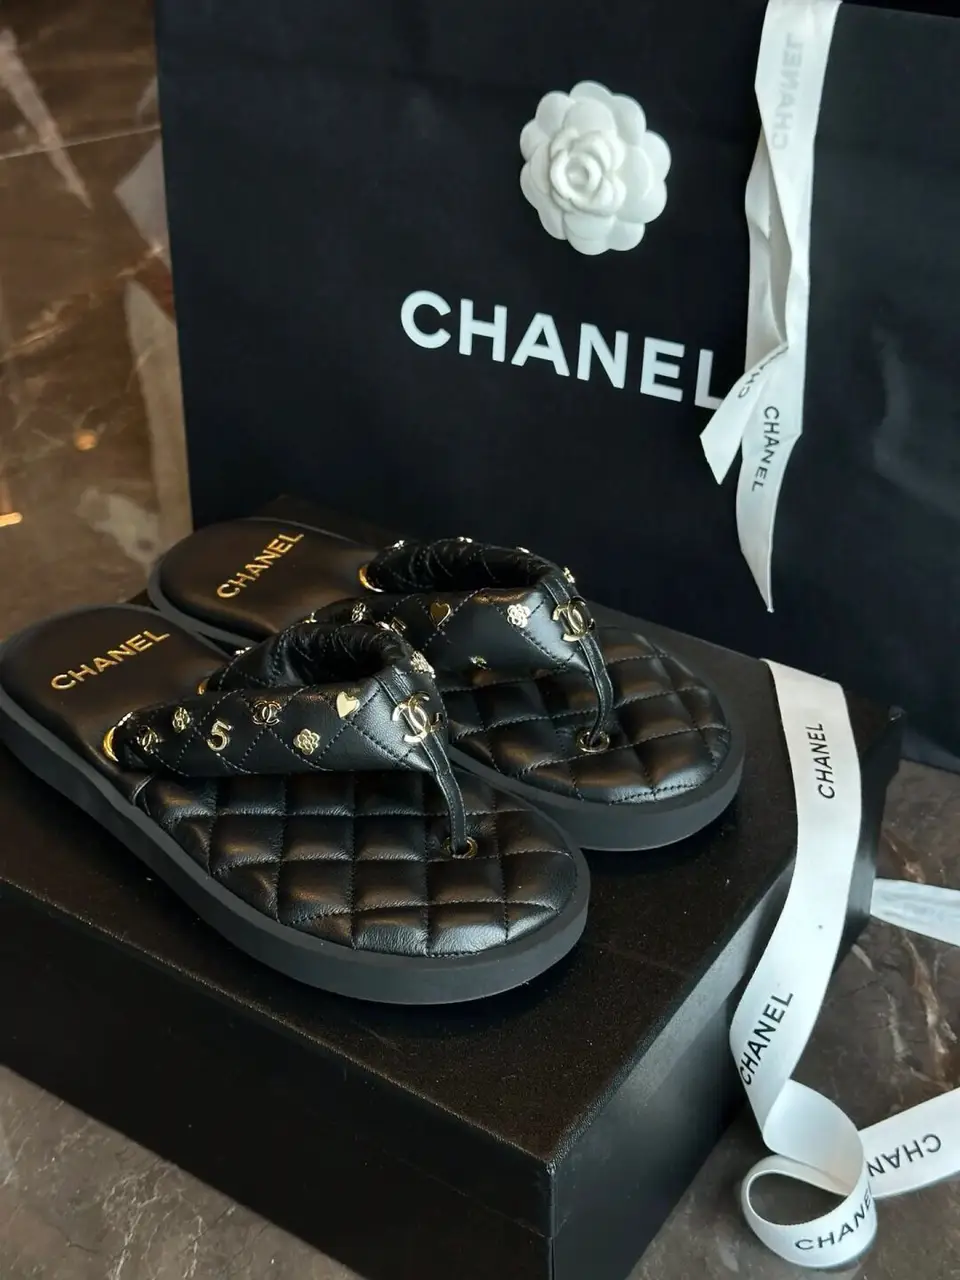 Chanel 23 Sandals, My Dream 🩴